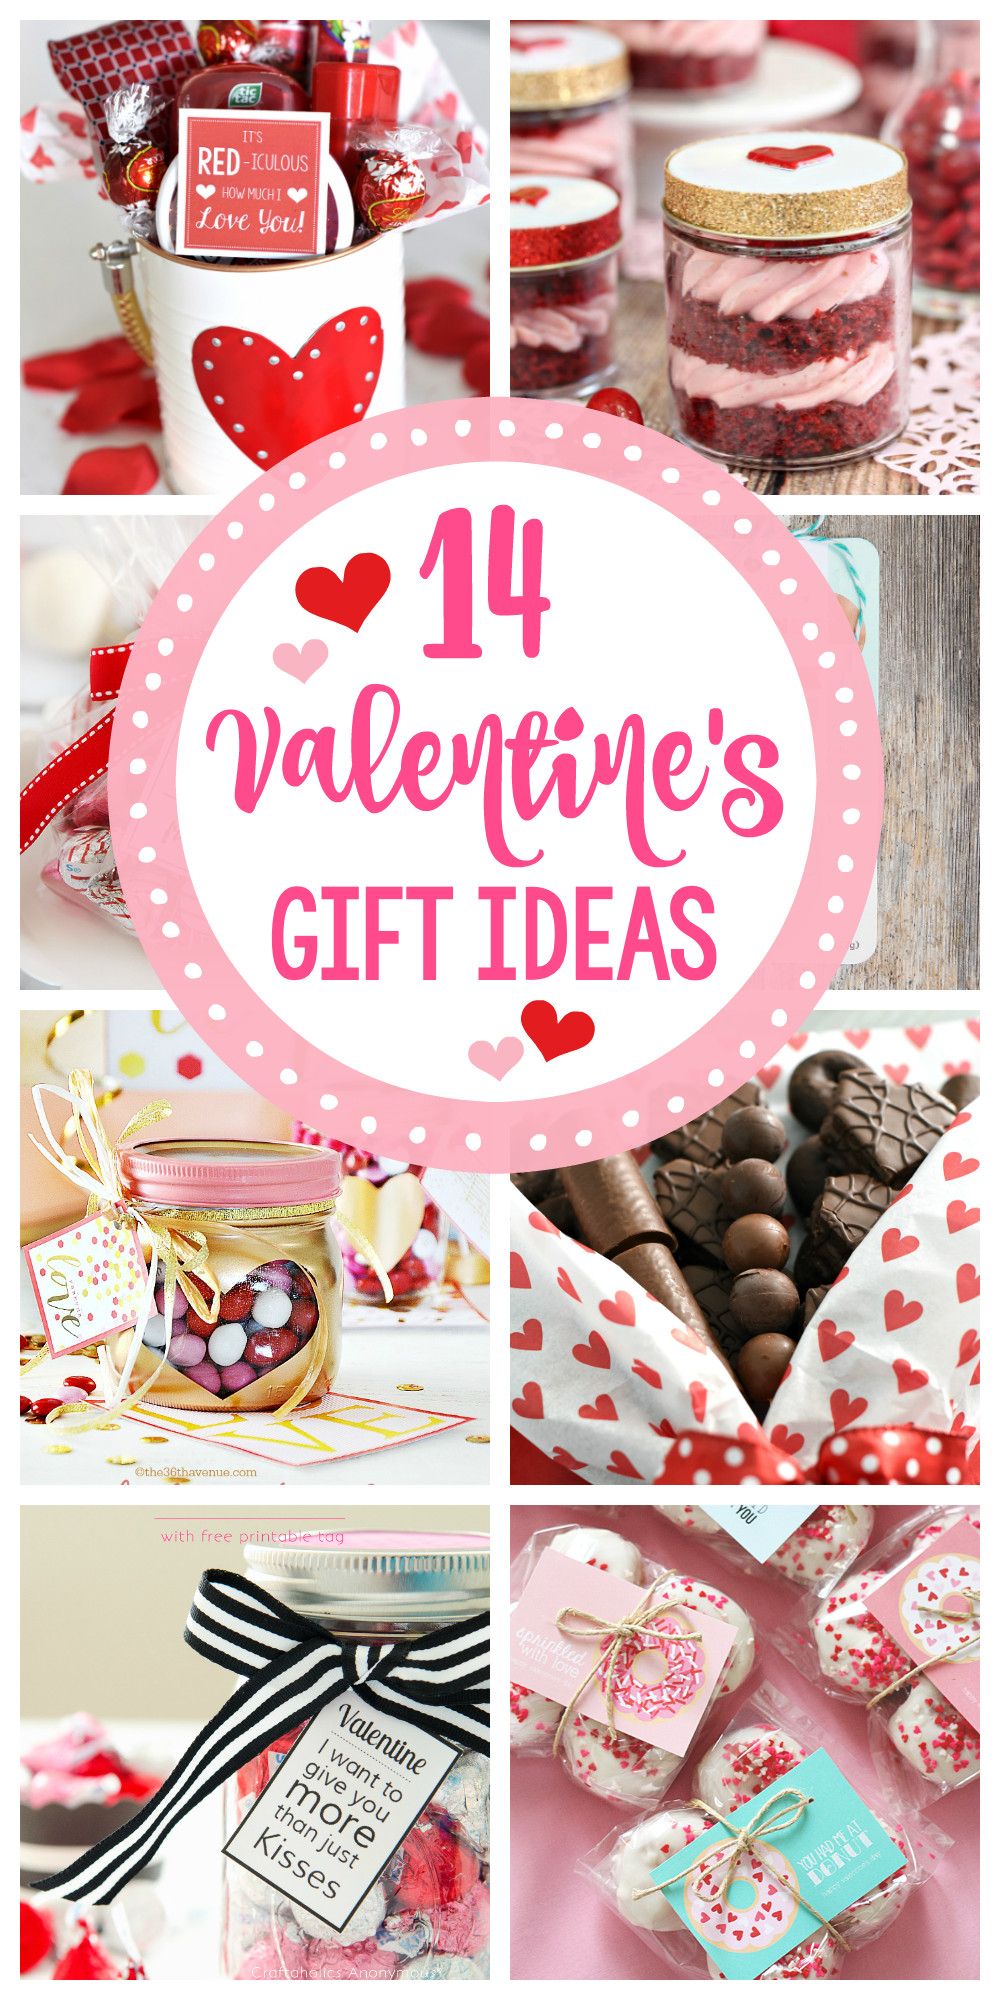 Valentines Gift Ideas Pinterest
 14 Fun & Creative Valentine s Day Gift Ideas – Fun Squared